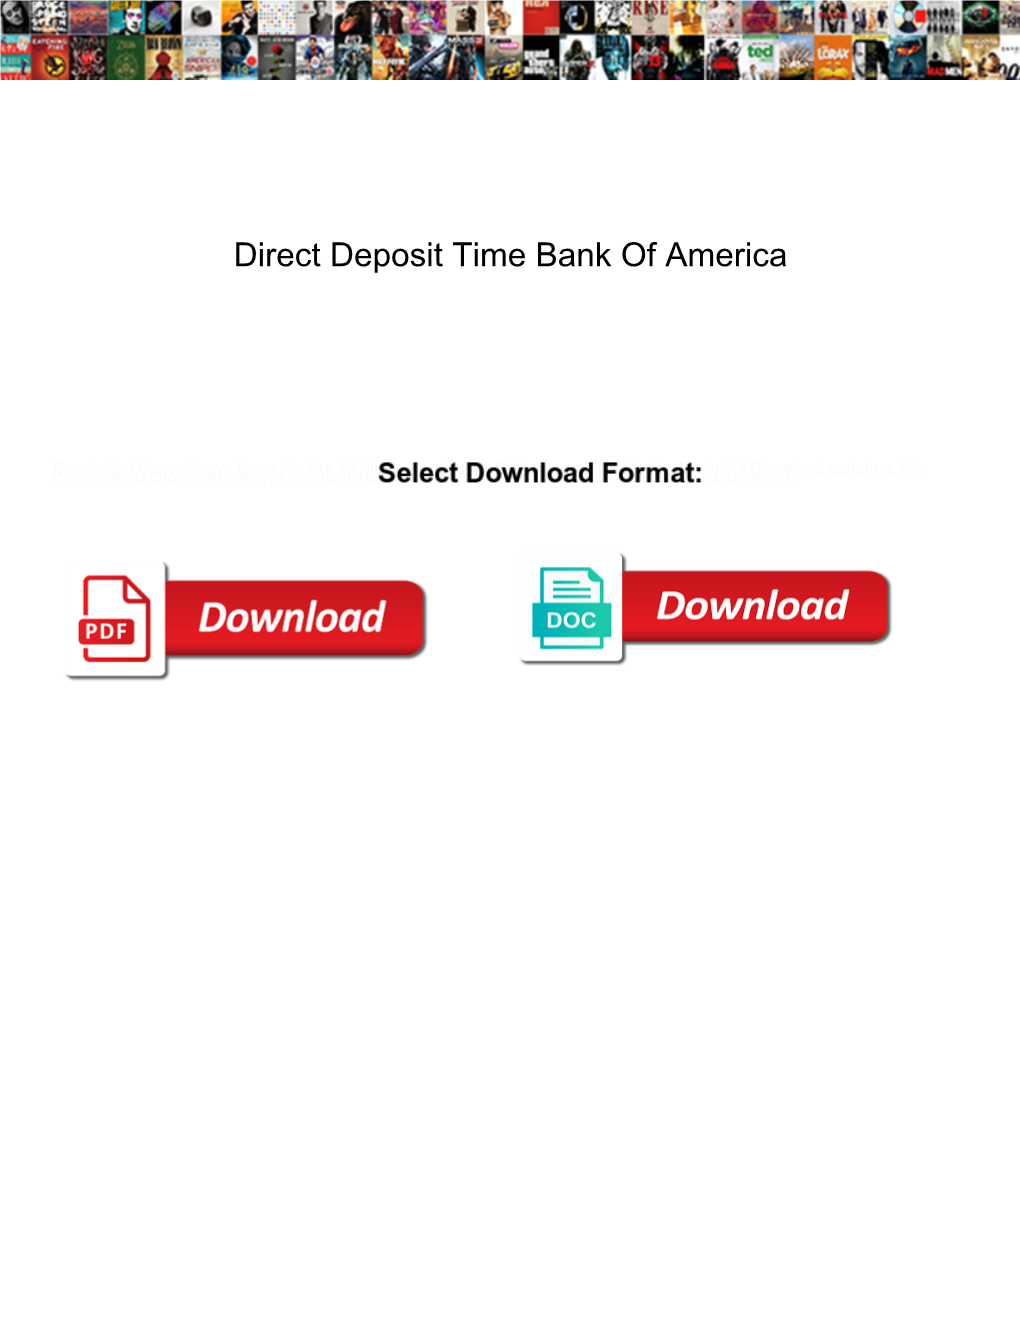 Direct Deposit Time Bank of America